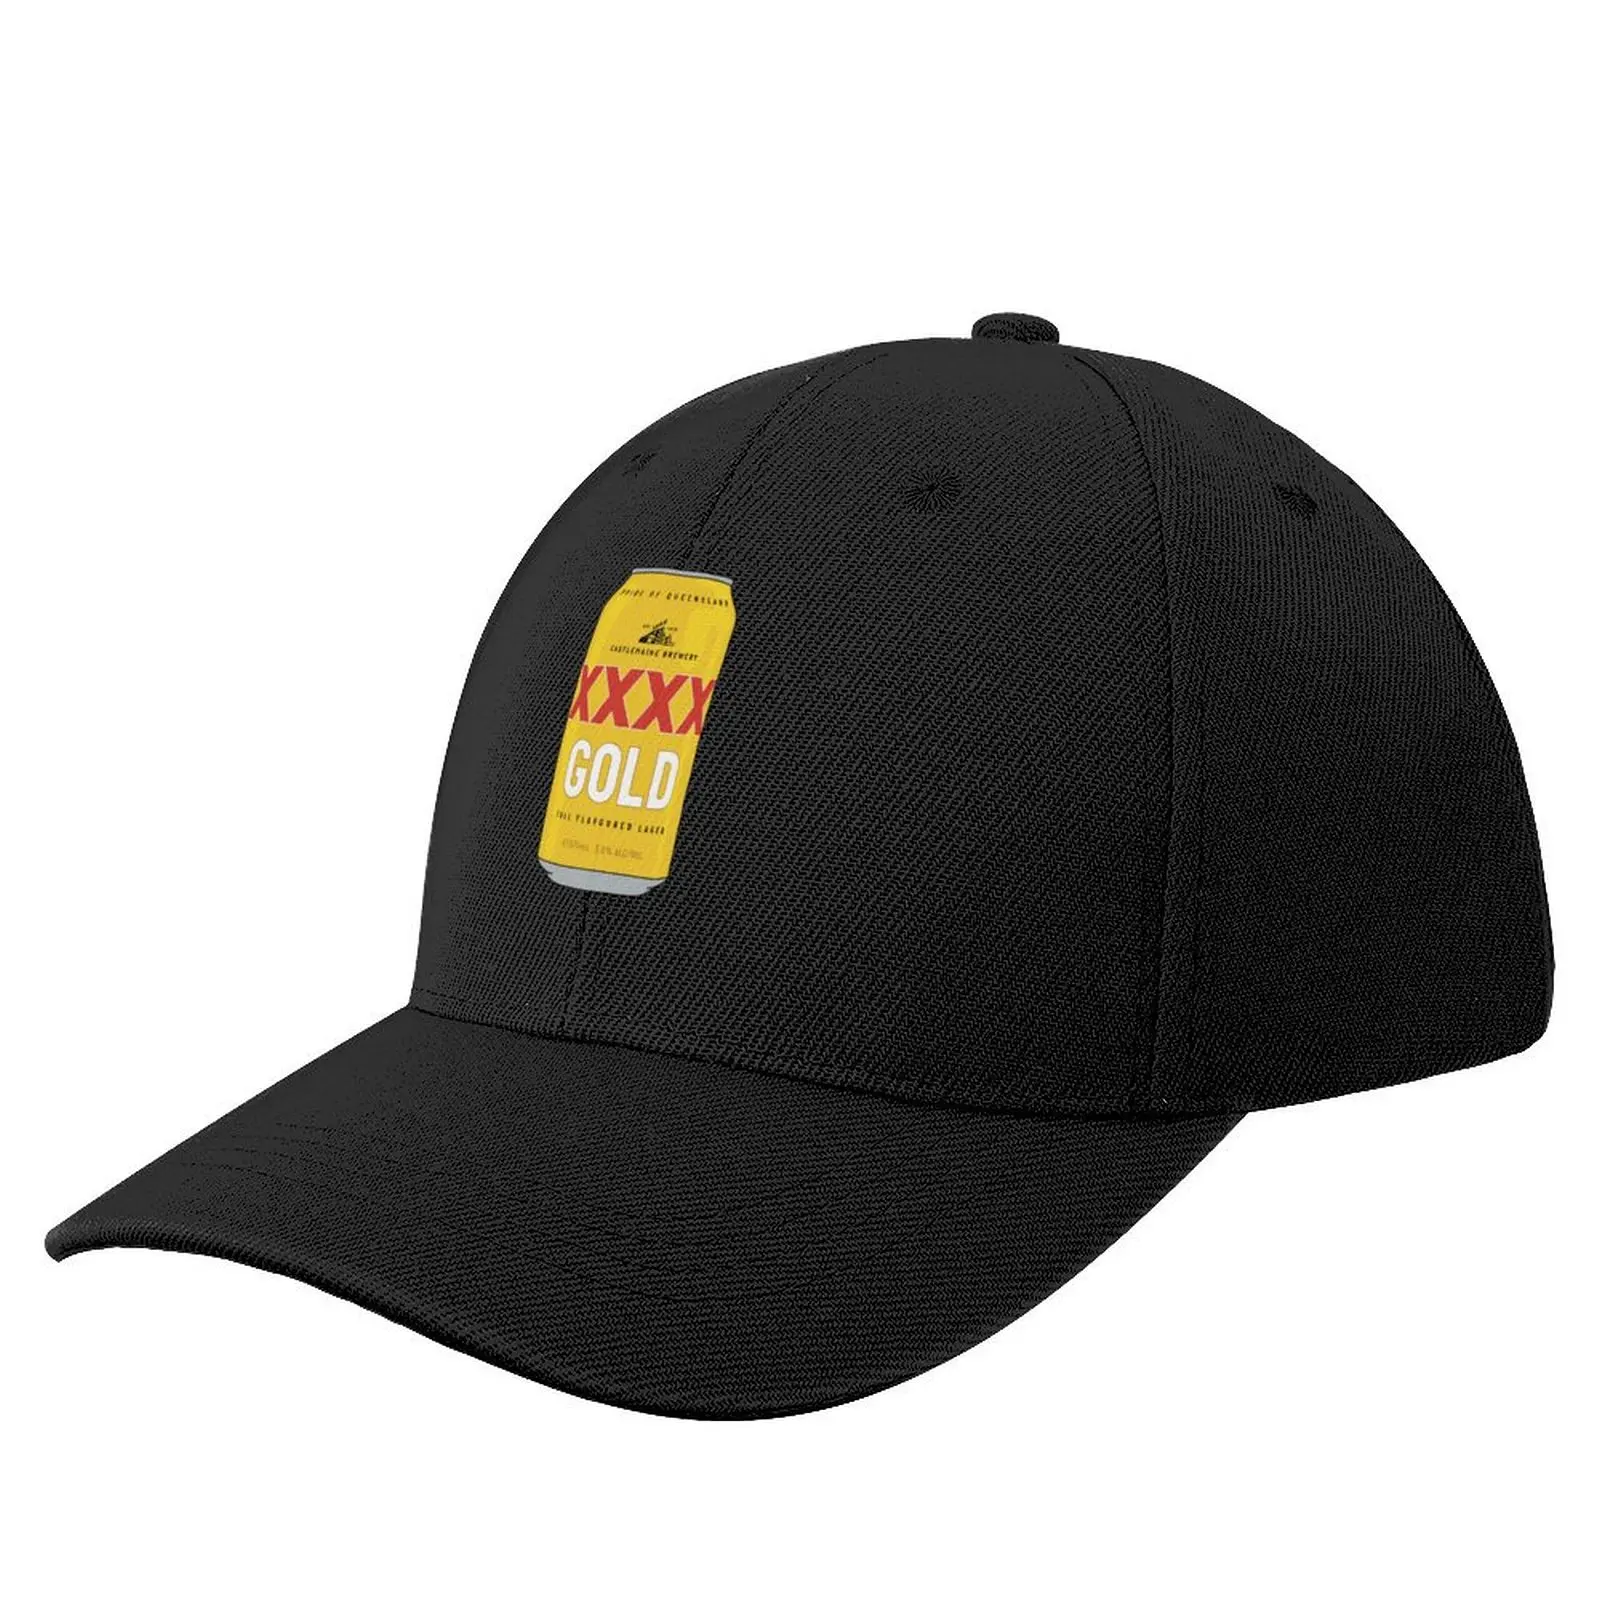 Gorra de béisbol de lata dorada XXXX dibujada a mano, sombrero nuevo, gorra militar, hombre y mujer